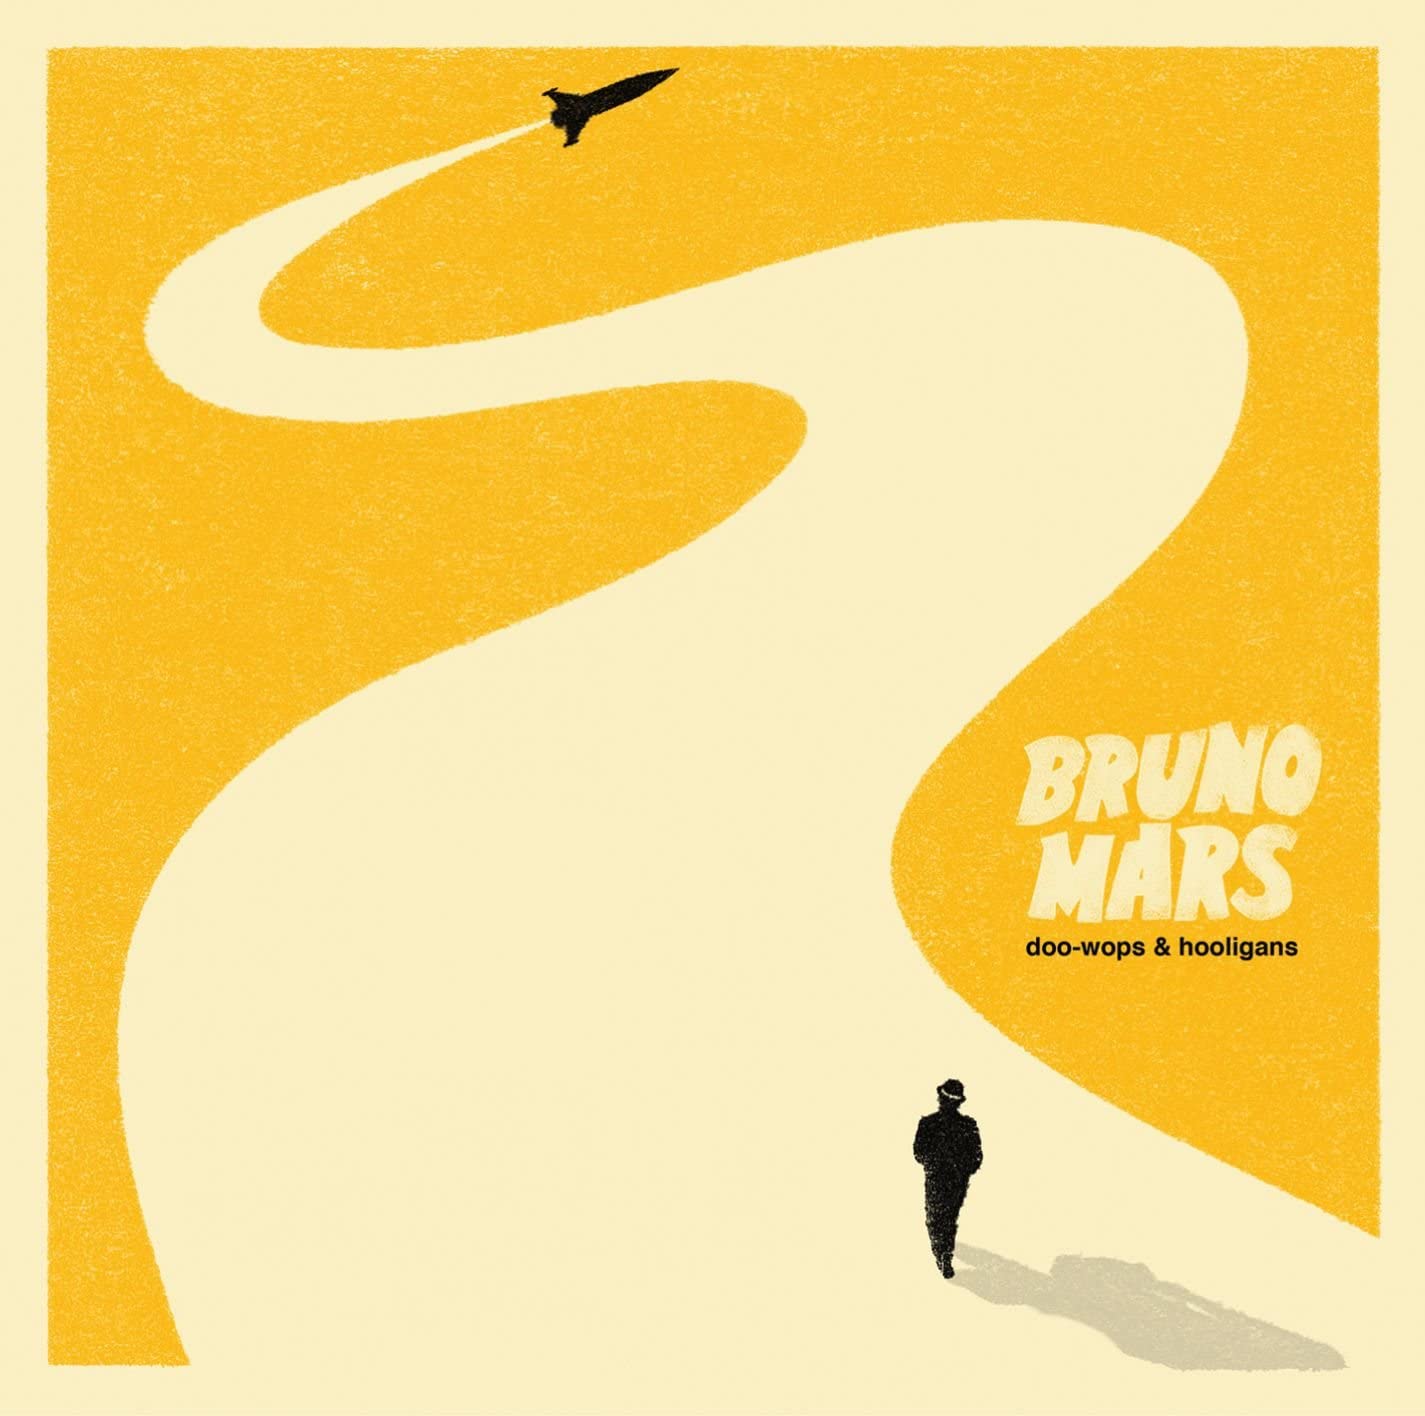 Mars, Bruno/Doo-Wops & Hooligans [CD]